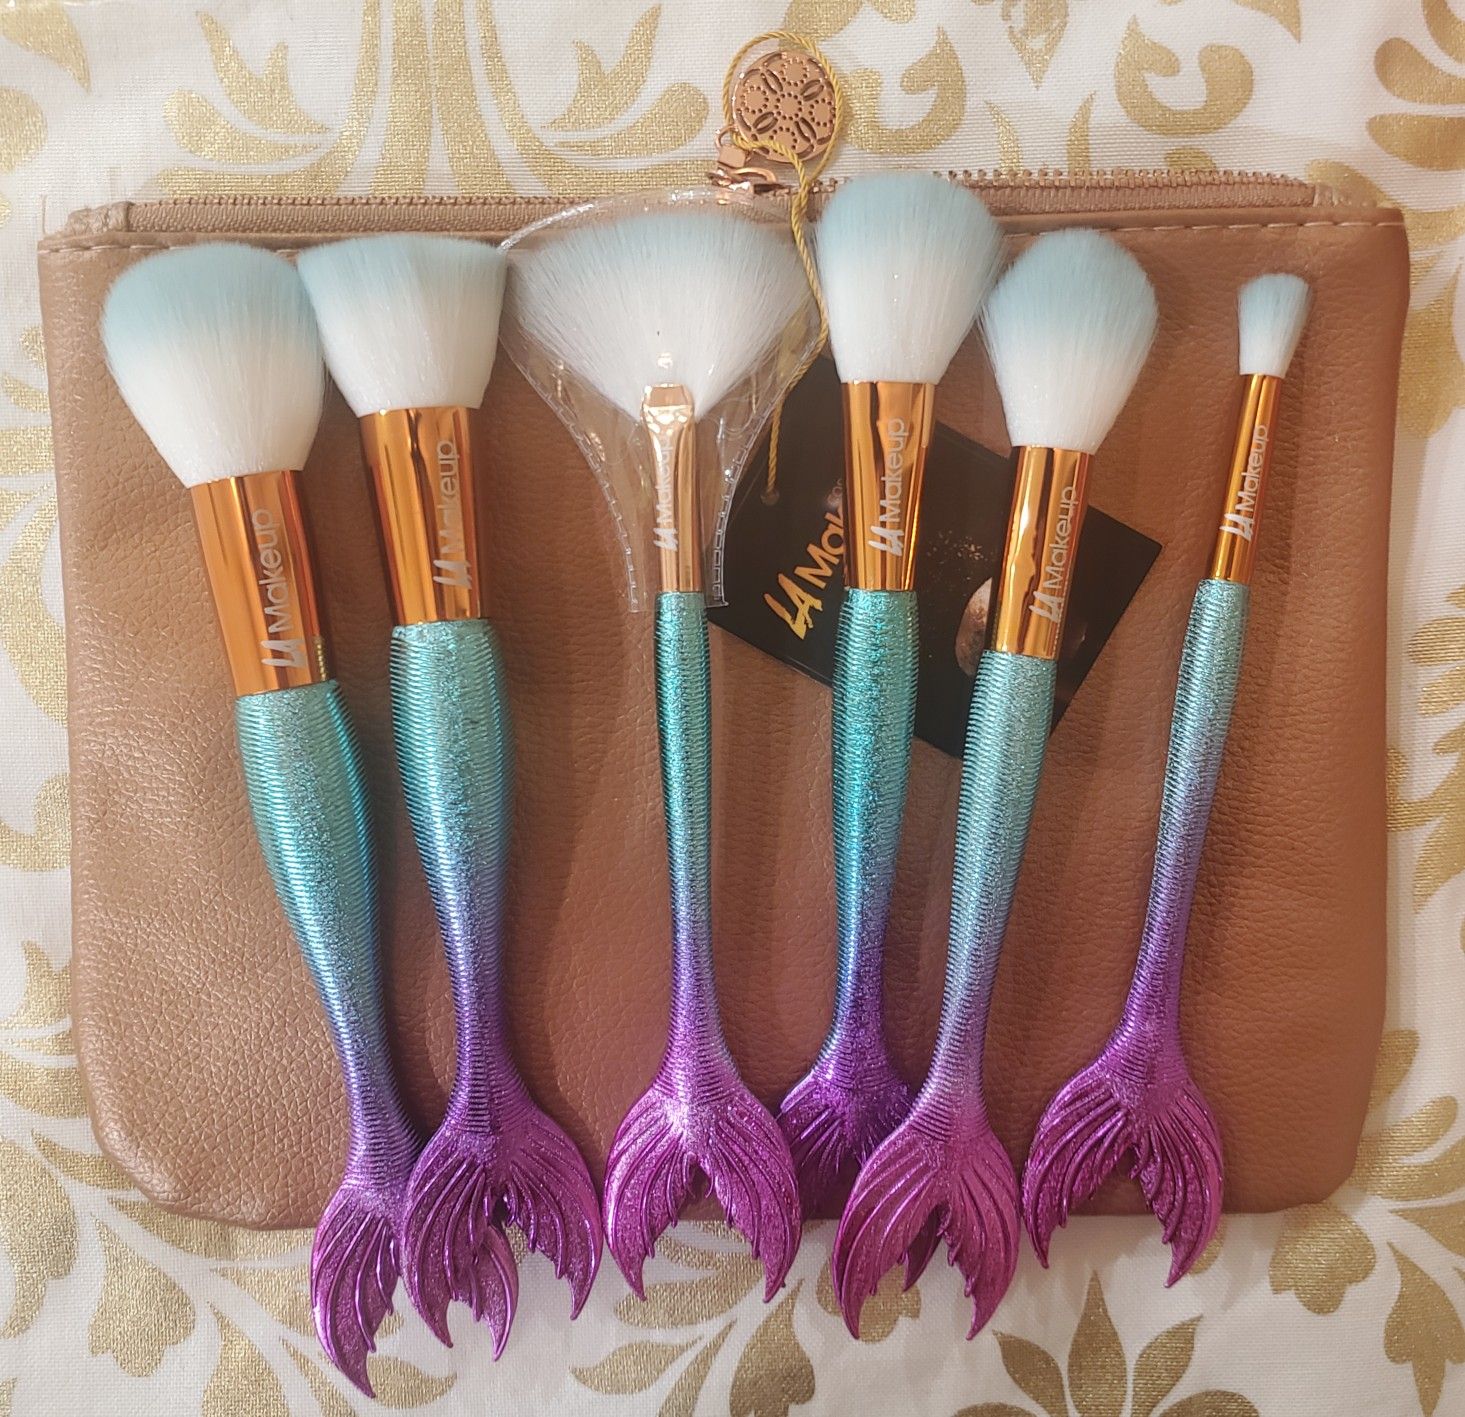 6pcs mermaid makeup brushes set with large cosmetic bag